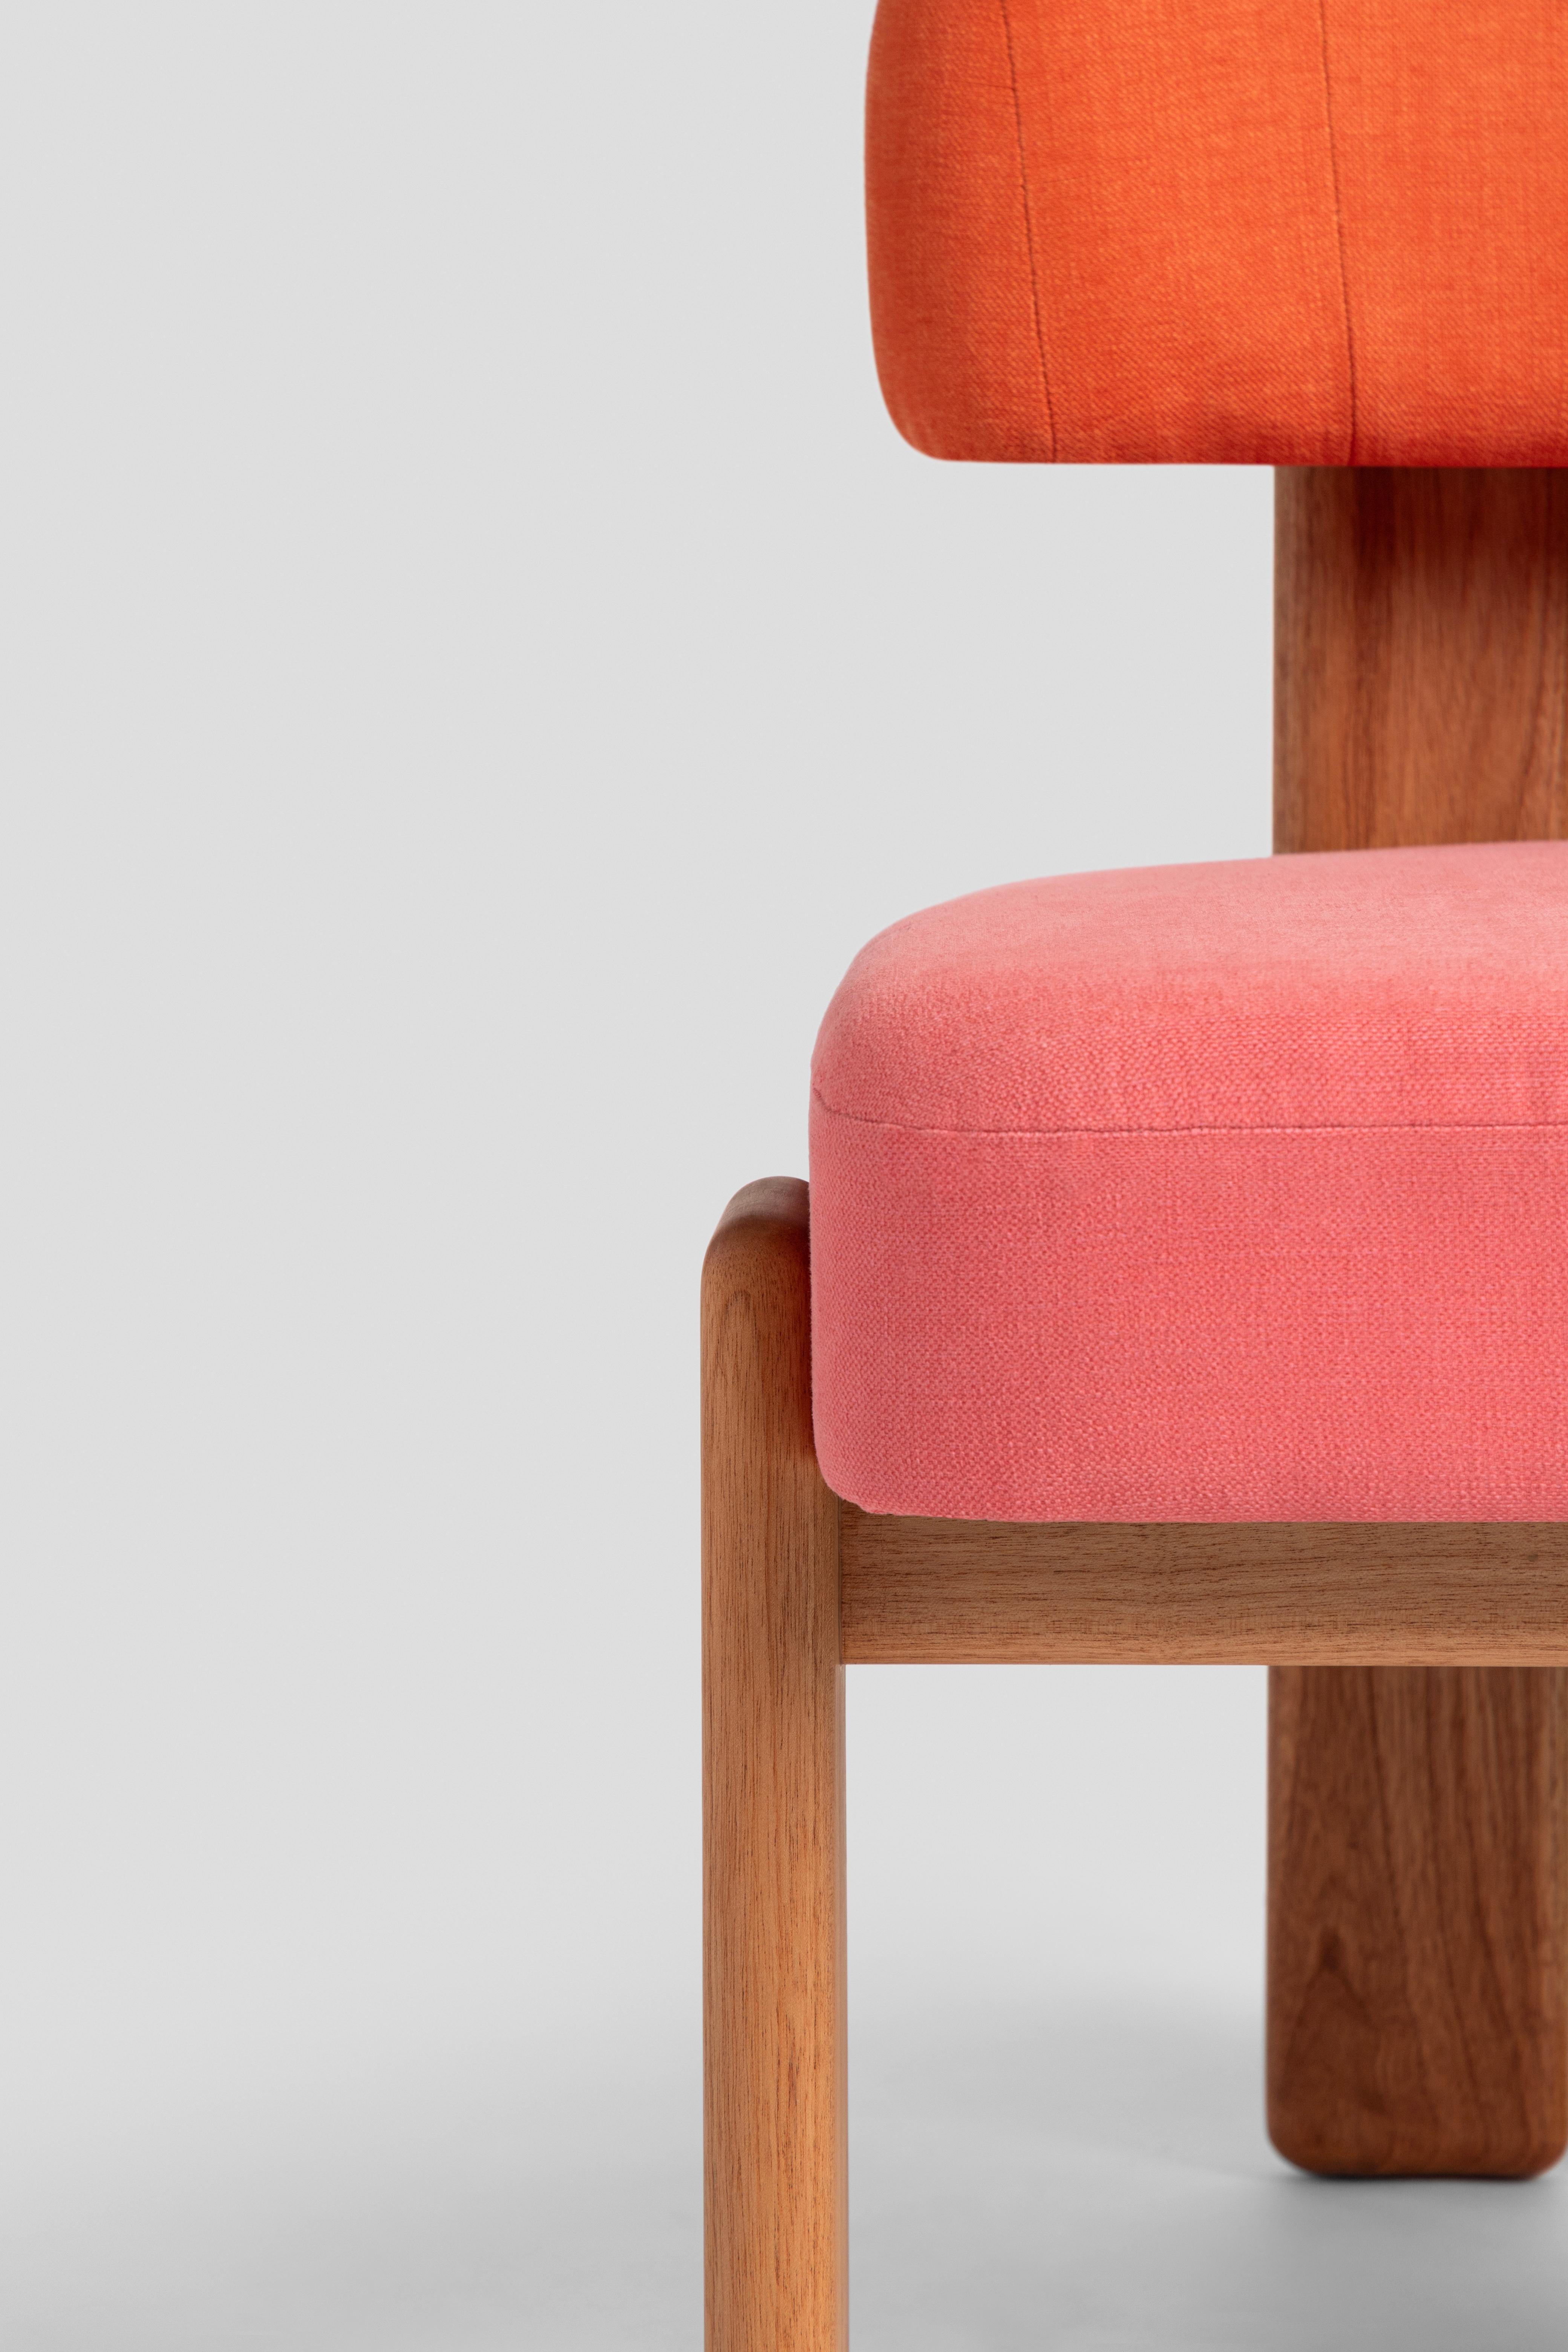 ANNI Toronja De la Paz Low Chair Limited Edition  Contemporary Mexican Design For Sale 4